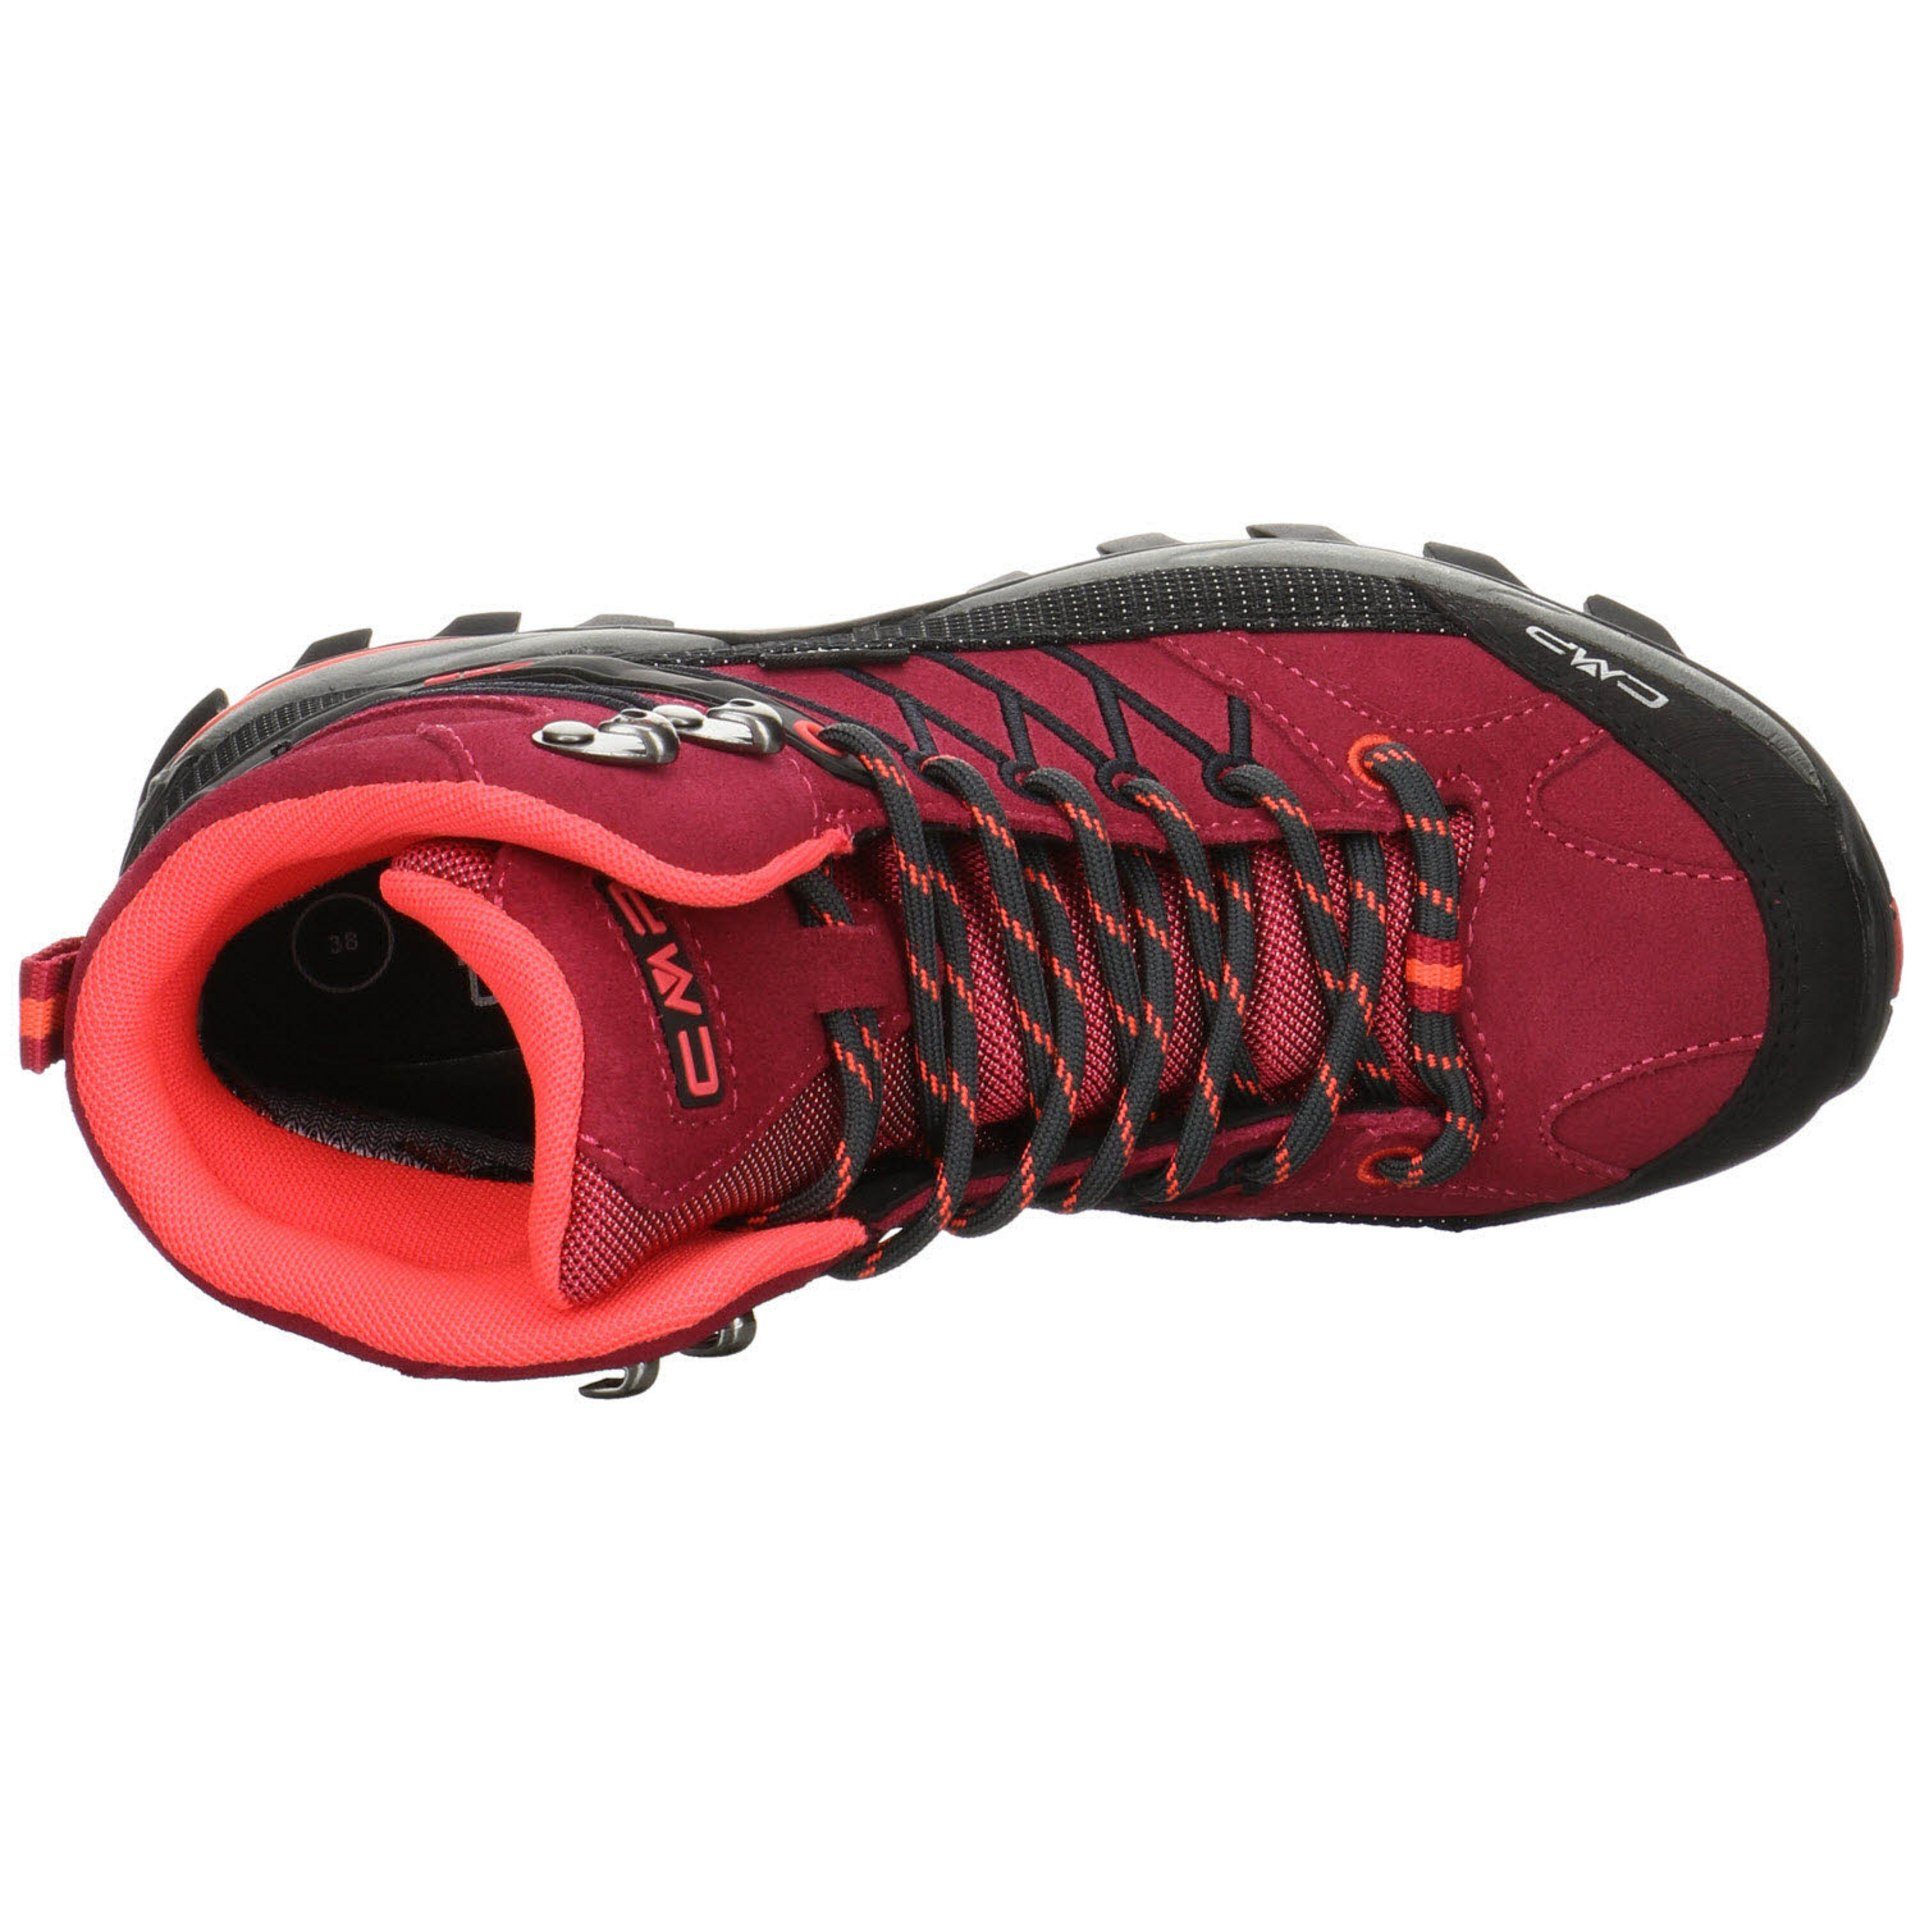 Mid Outdoorschuh Outdoor Schuhe Leder-/Textilkombination Damen Outdoorschuh Rigel CMP MAGENTA-ANTRACITE